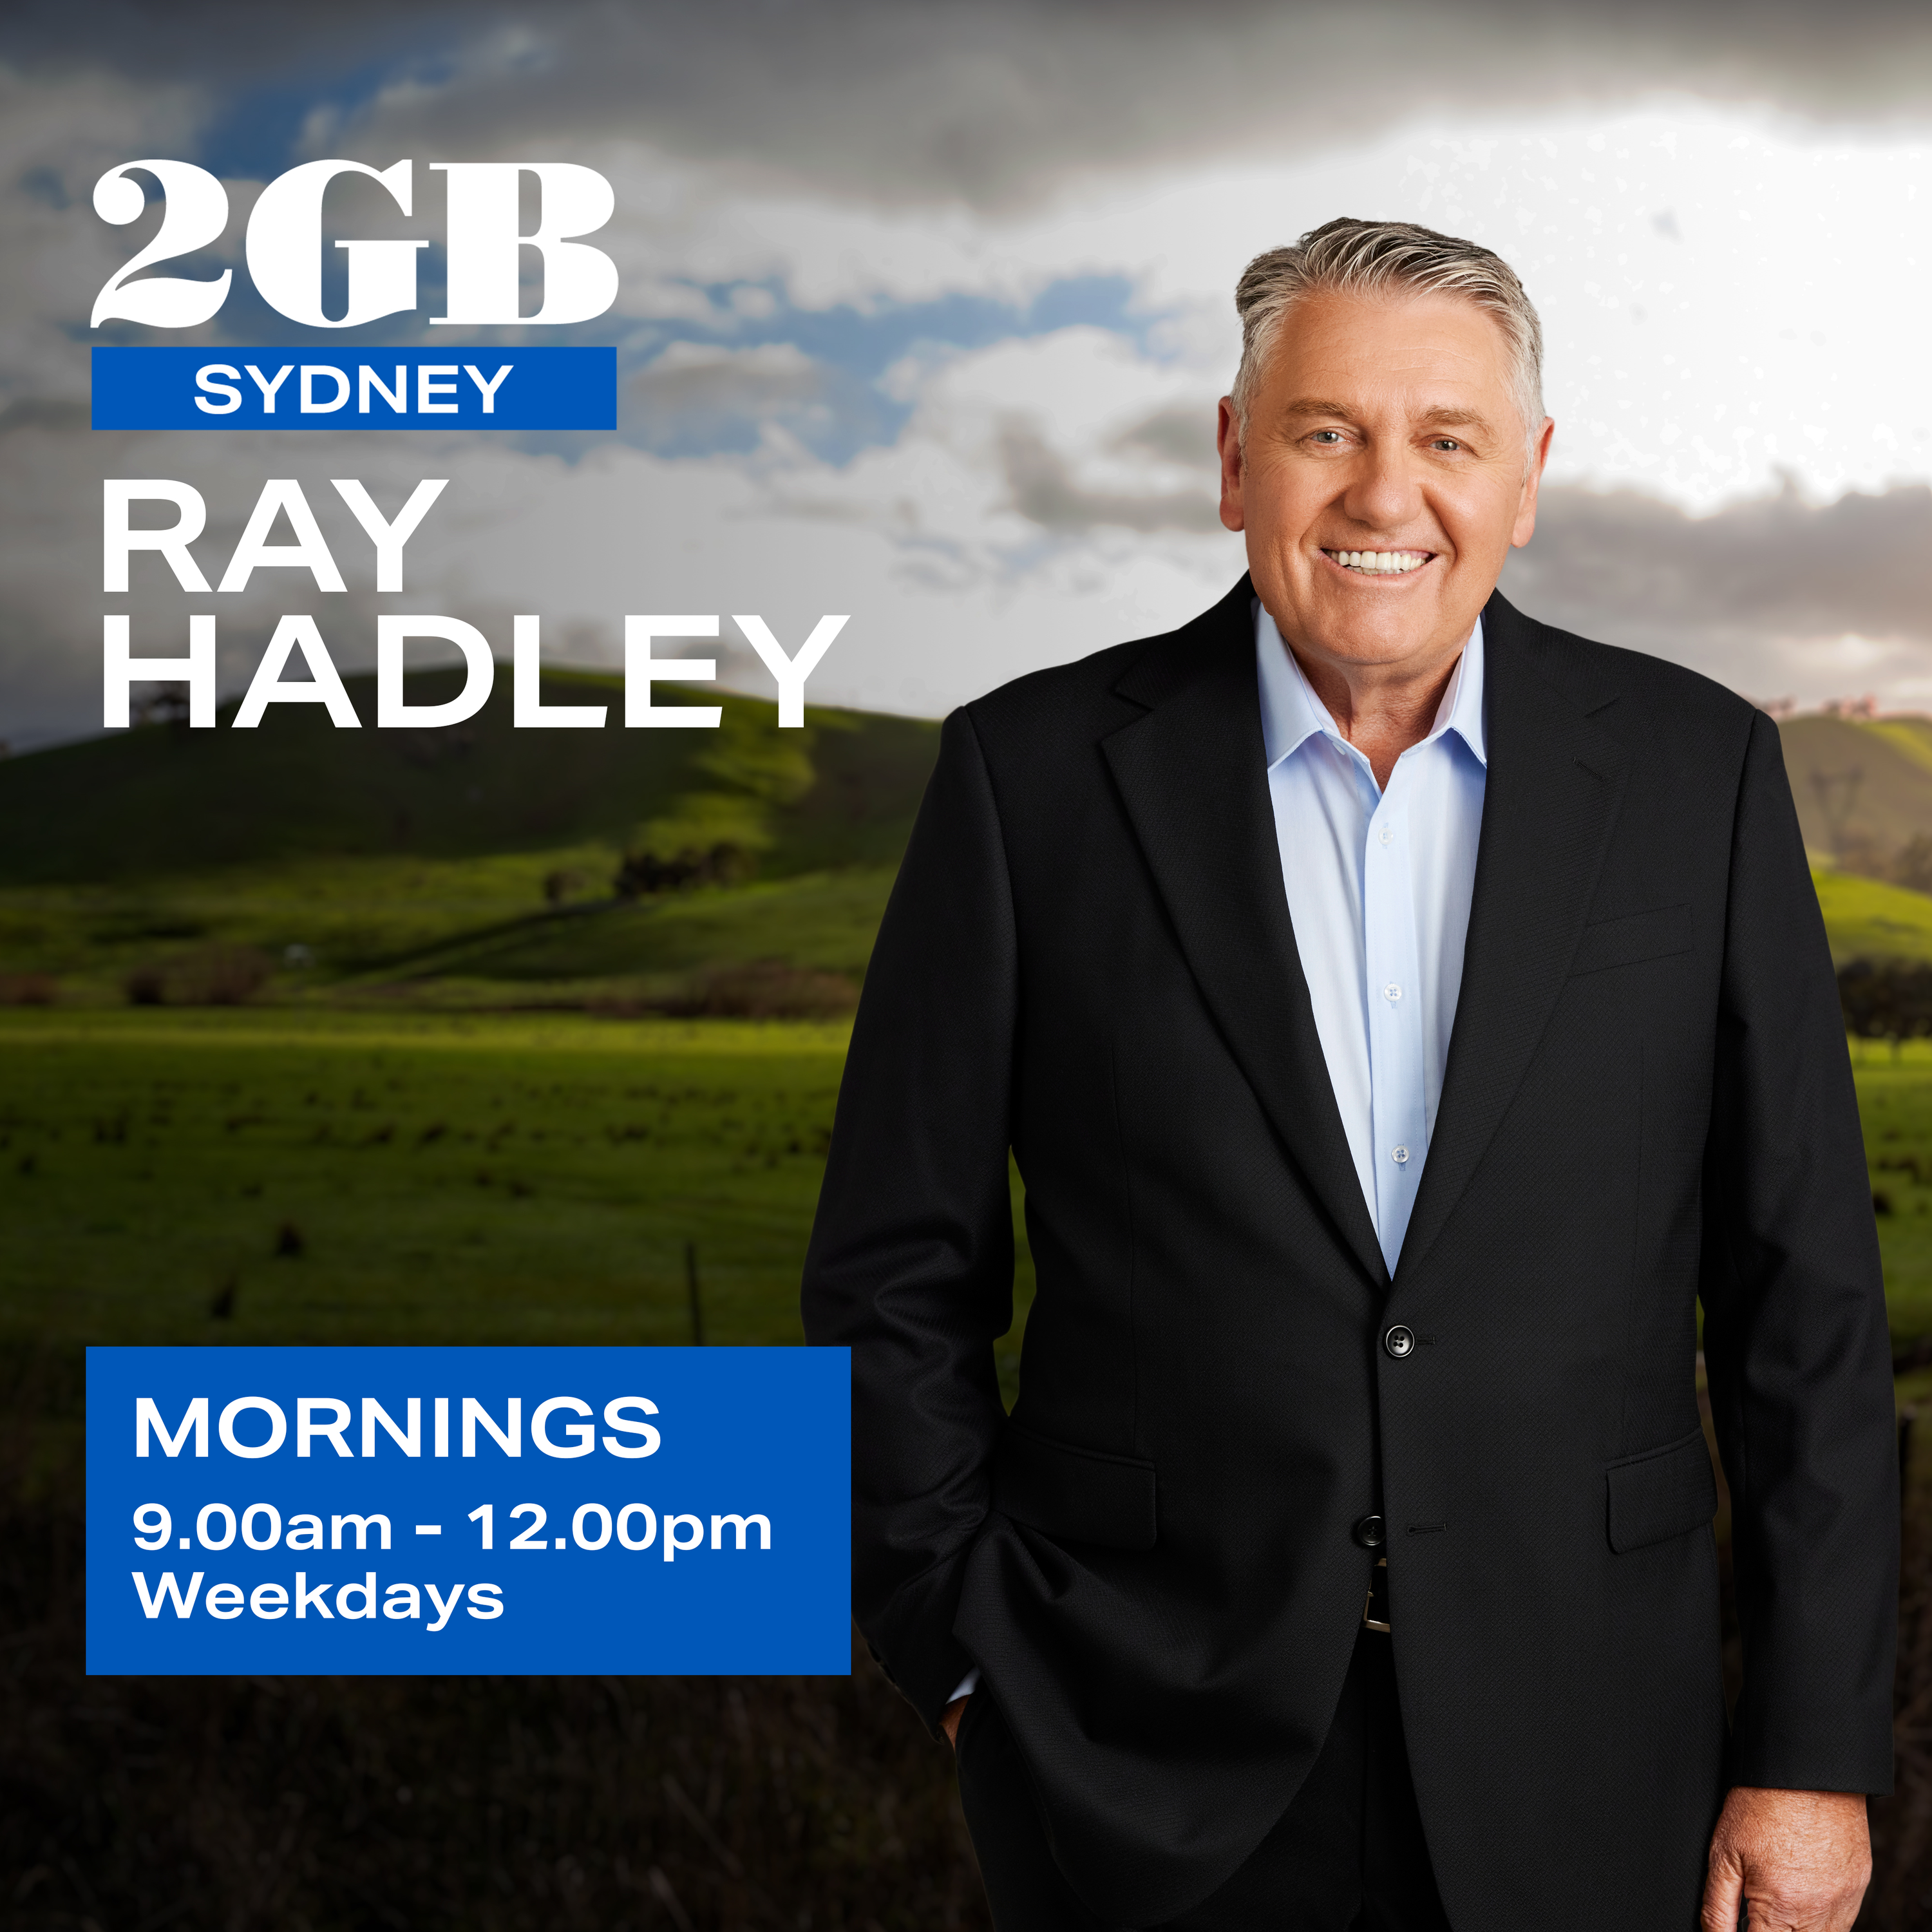 Ray Hadley urges NSW Premier to follow Daniel Andrews' lead